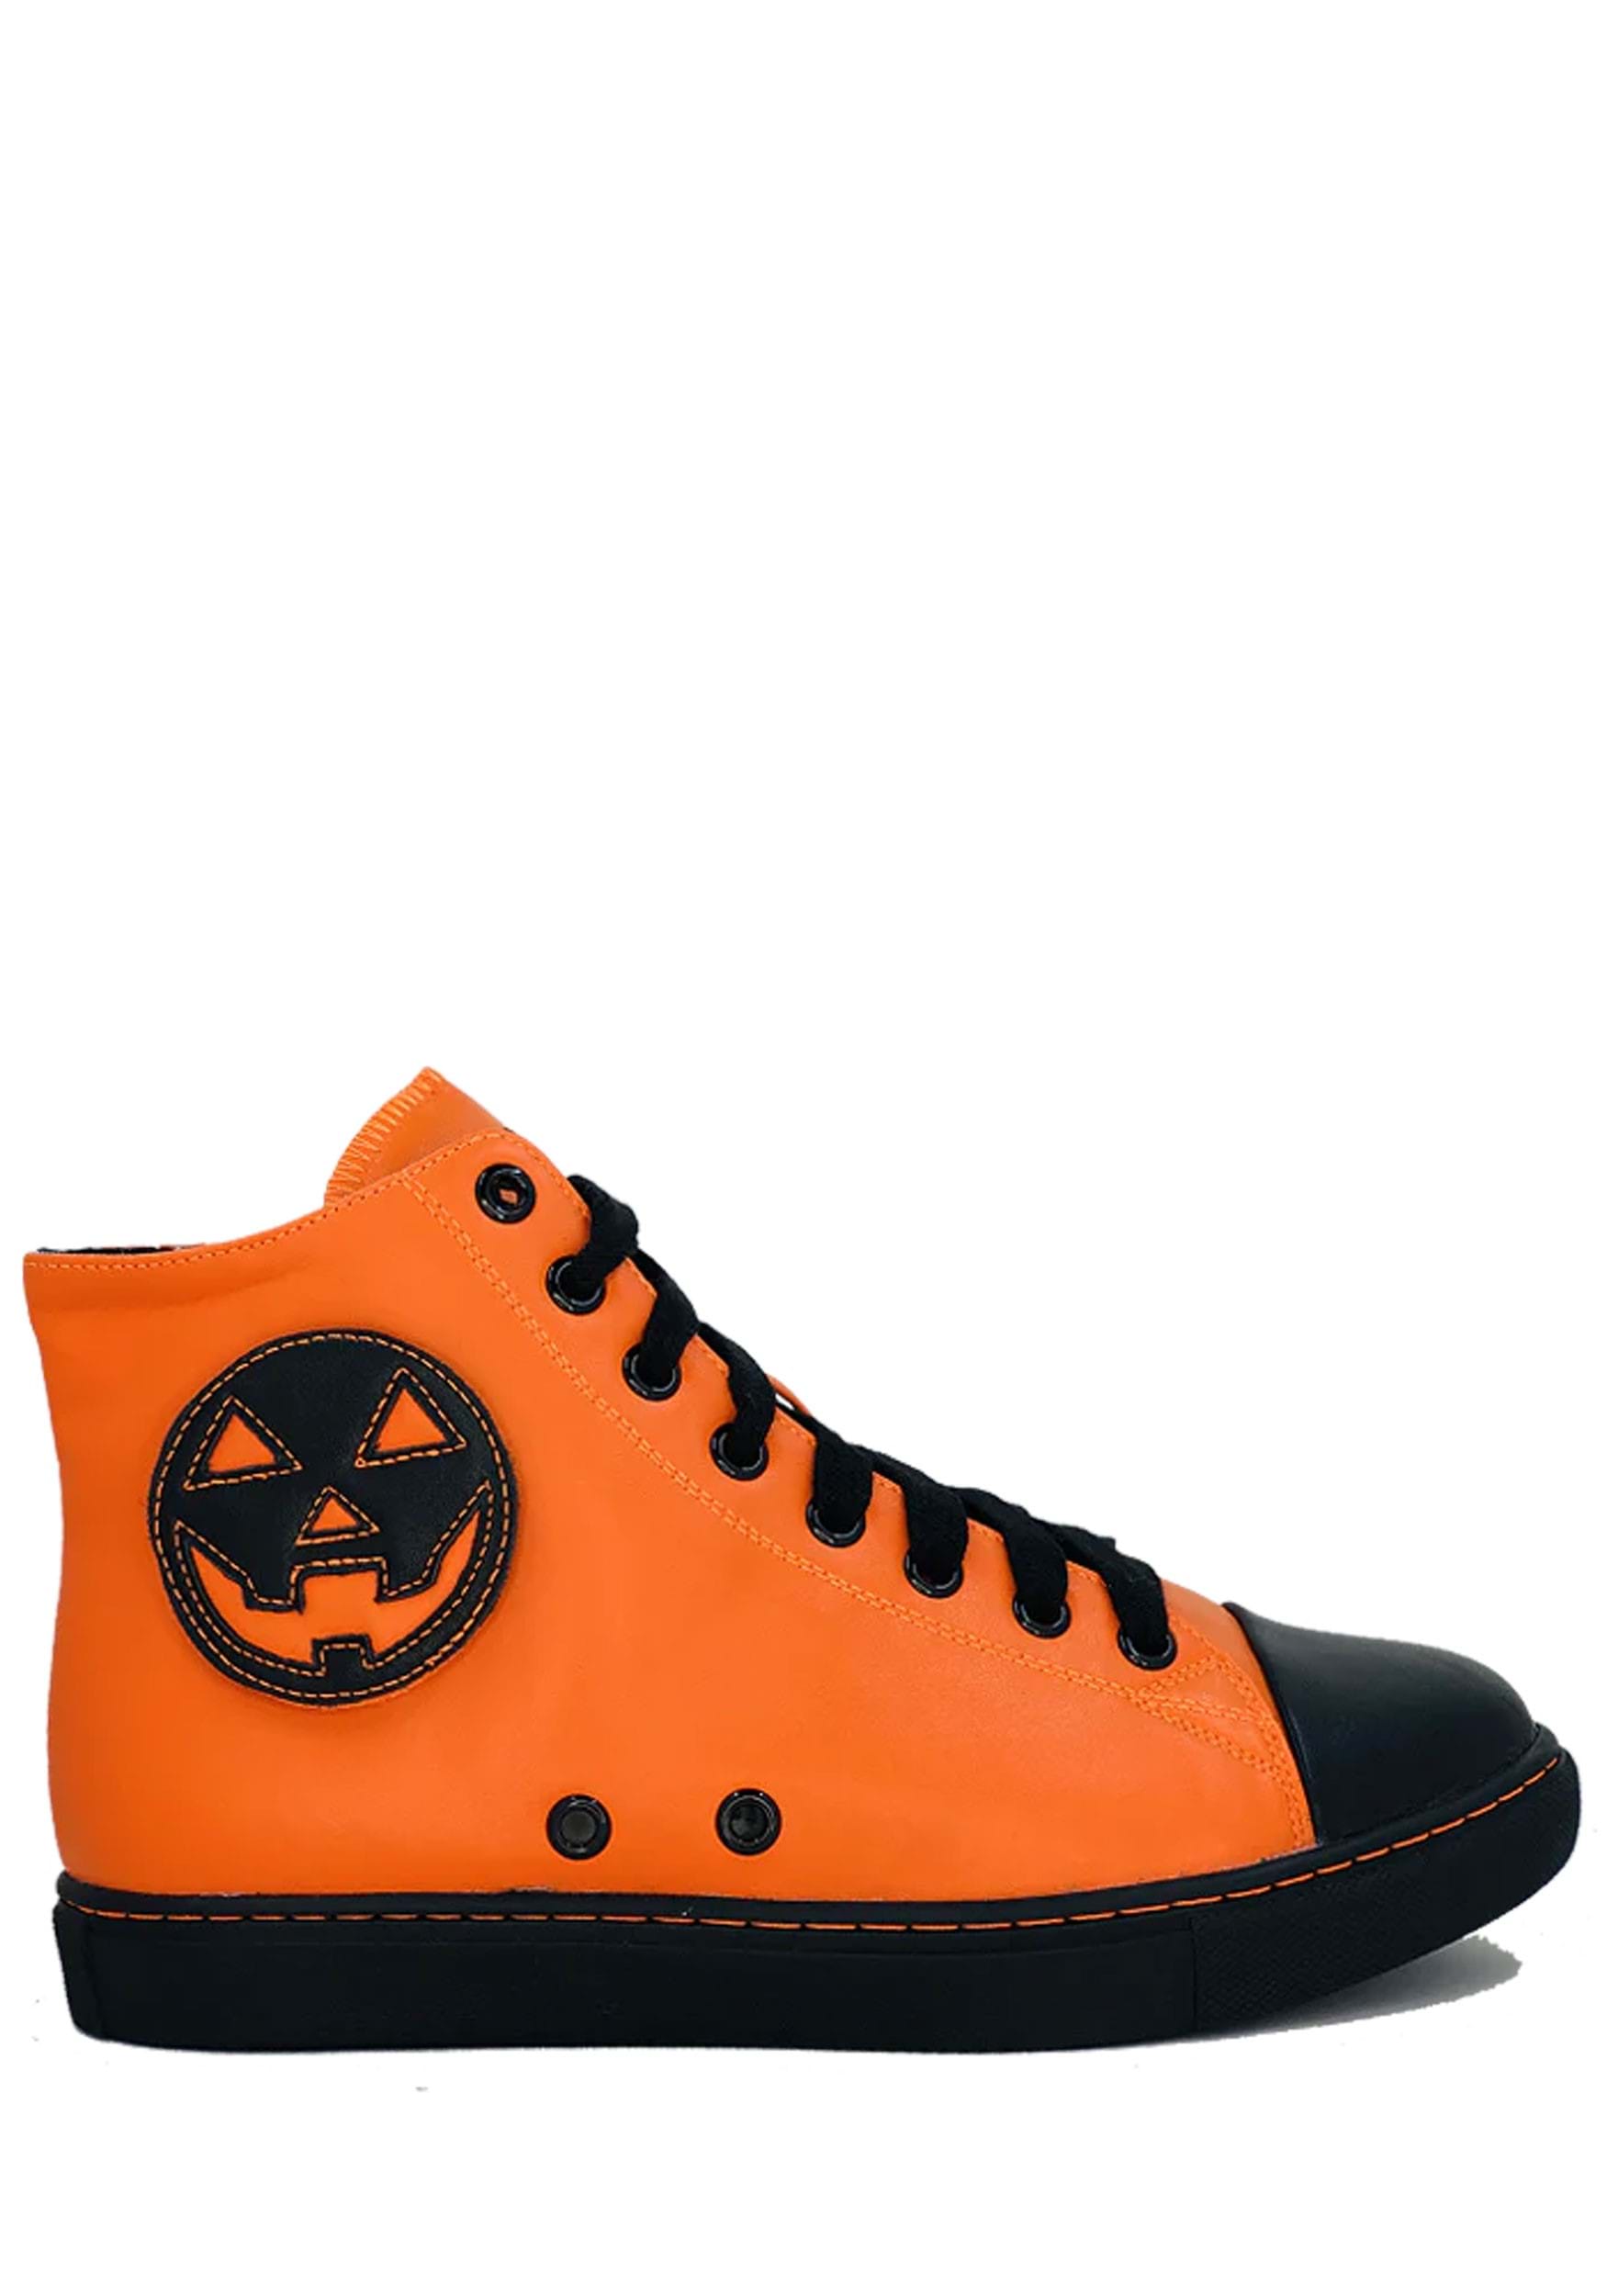 Image of Women's Orange Pumpkin Chelsea Jack High Top Sneaker | Halloween Footwear ID SVCHELSEAJACK-OR-5